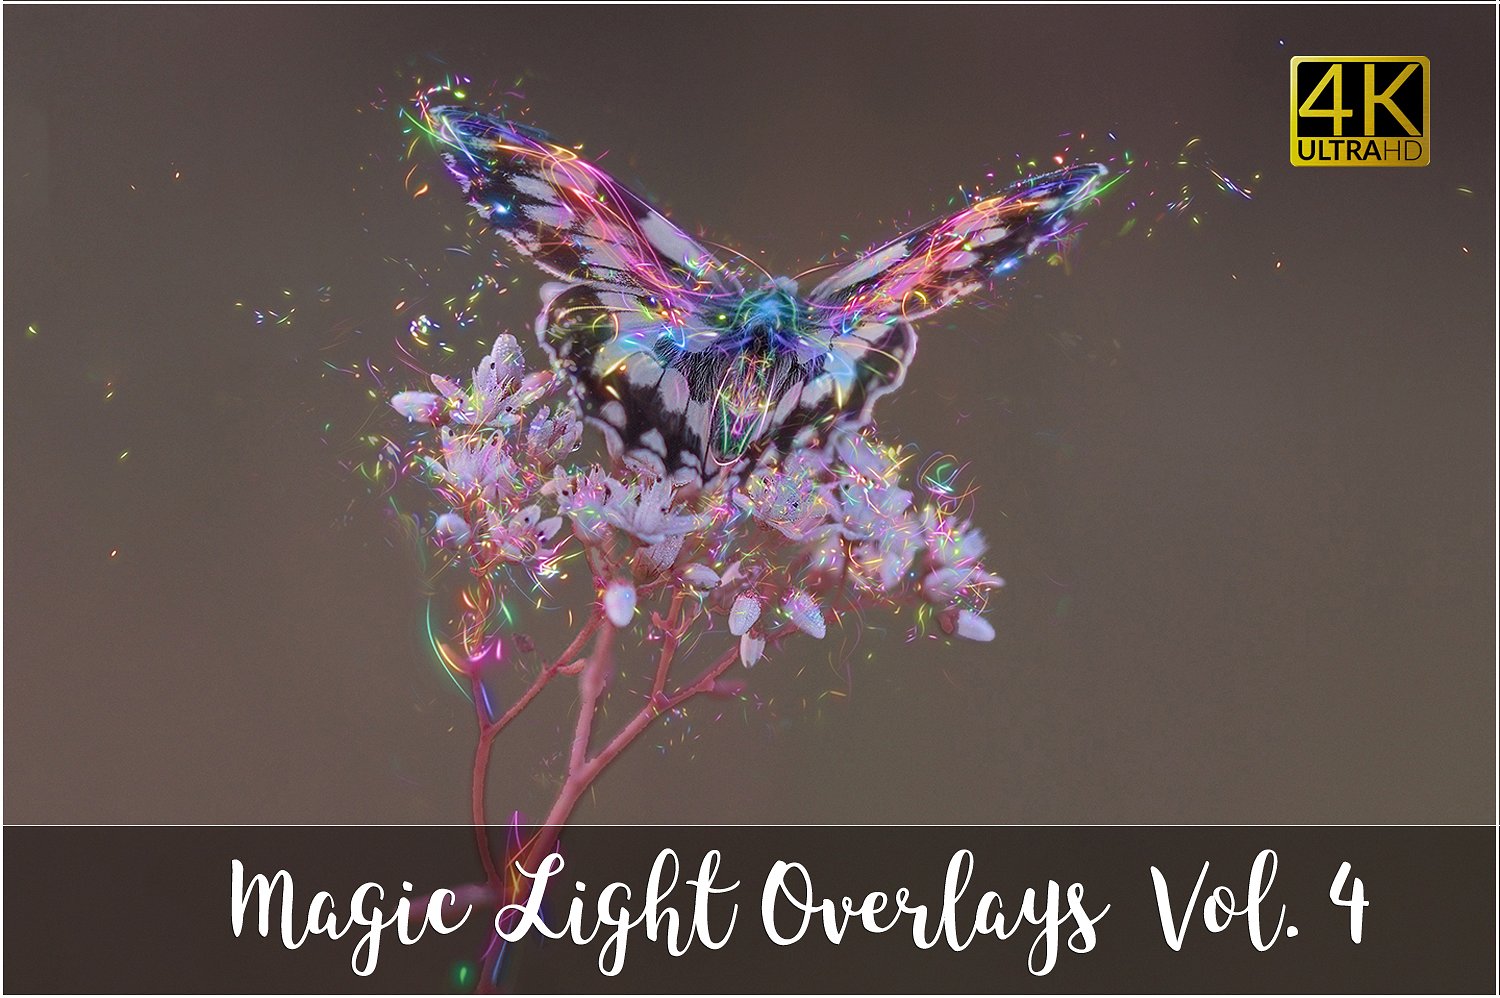 4K魔法边缘光图案叠加Vol. 4 4K Magic Light Overlays Vol. 4插图